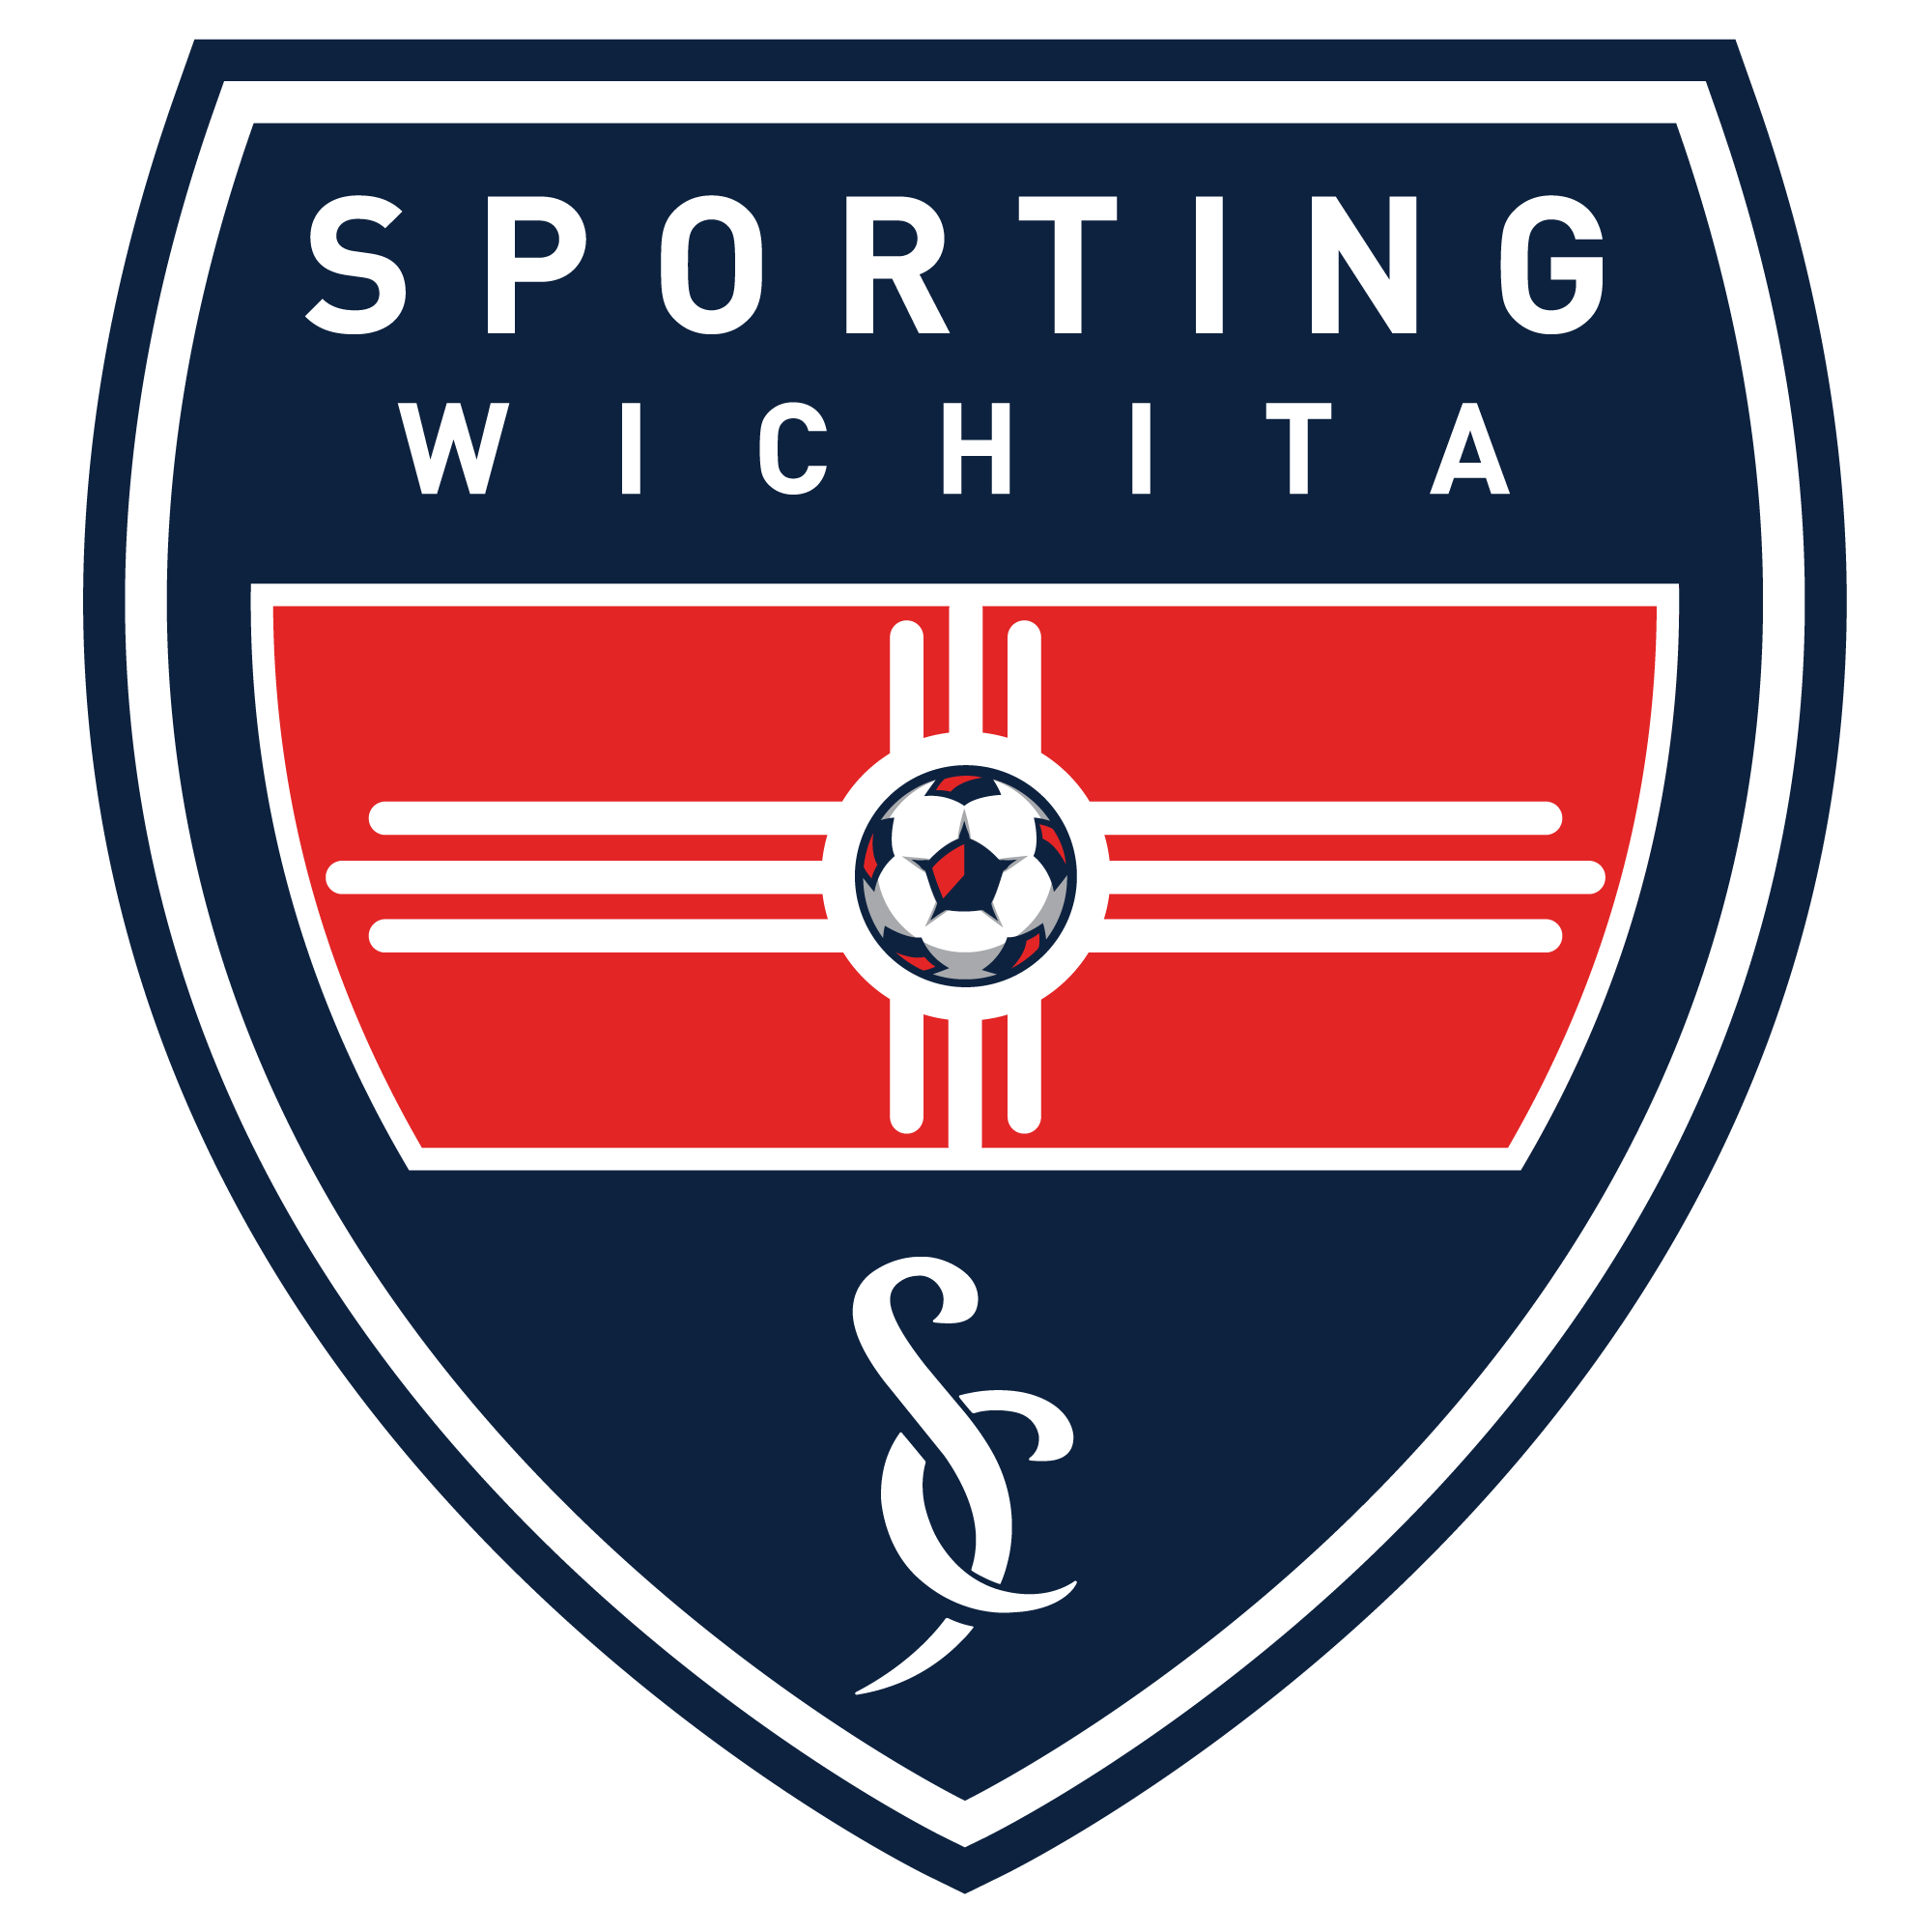 Wichita Logo - Sporting Wichita